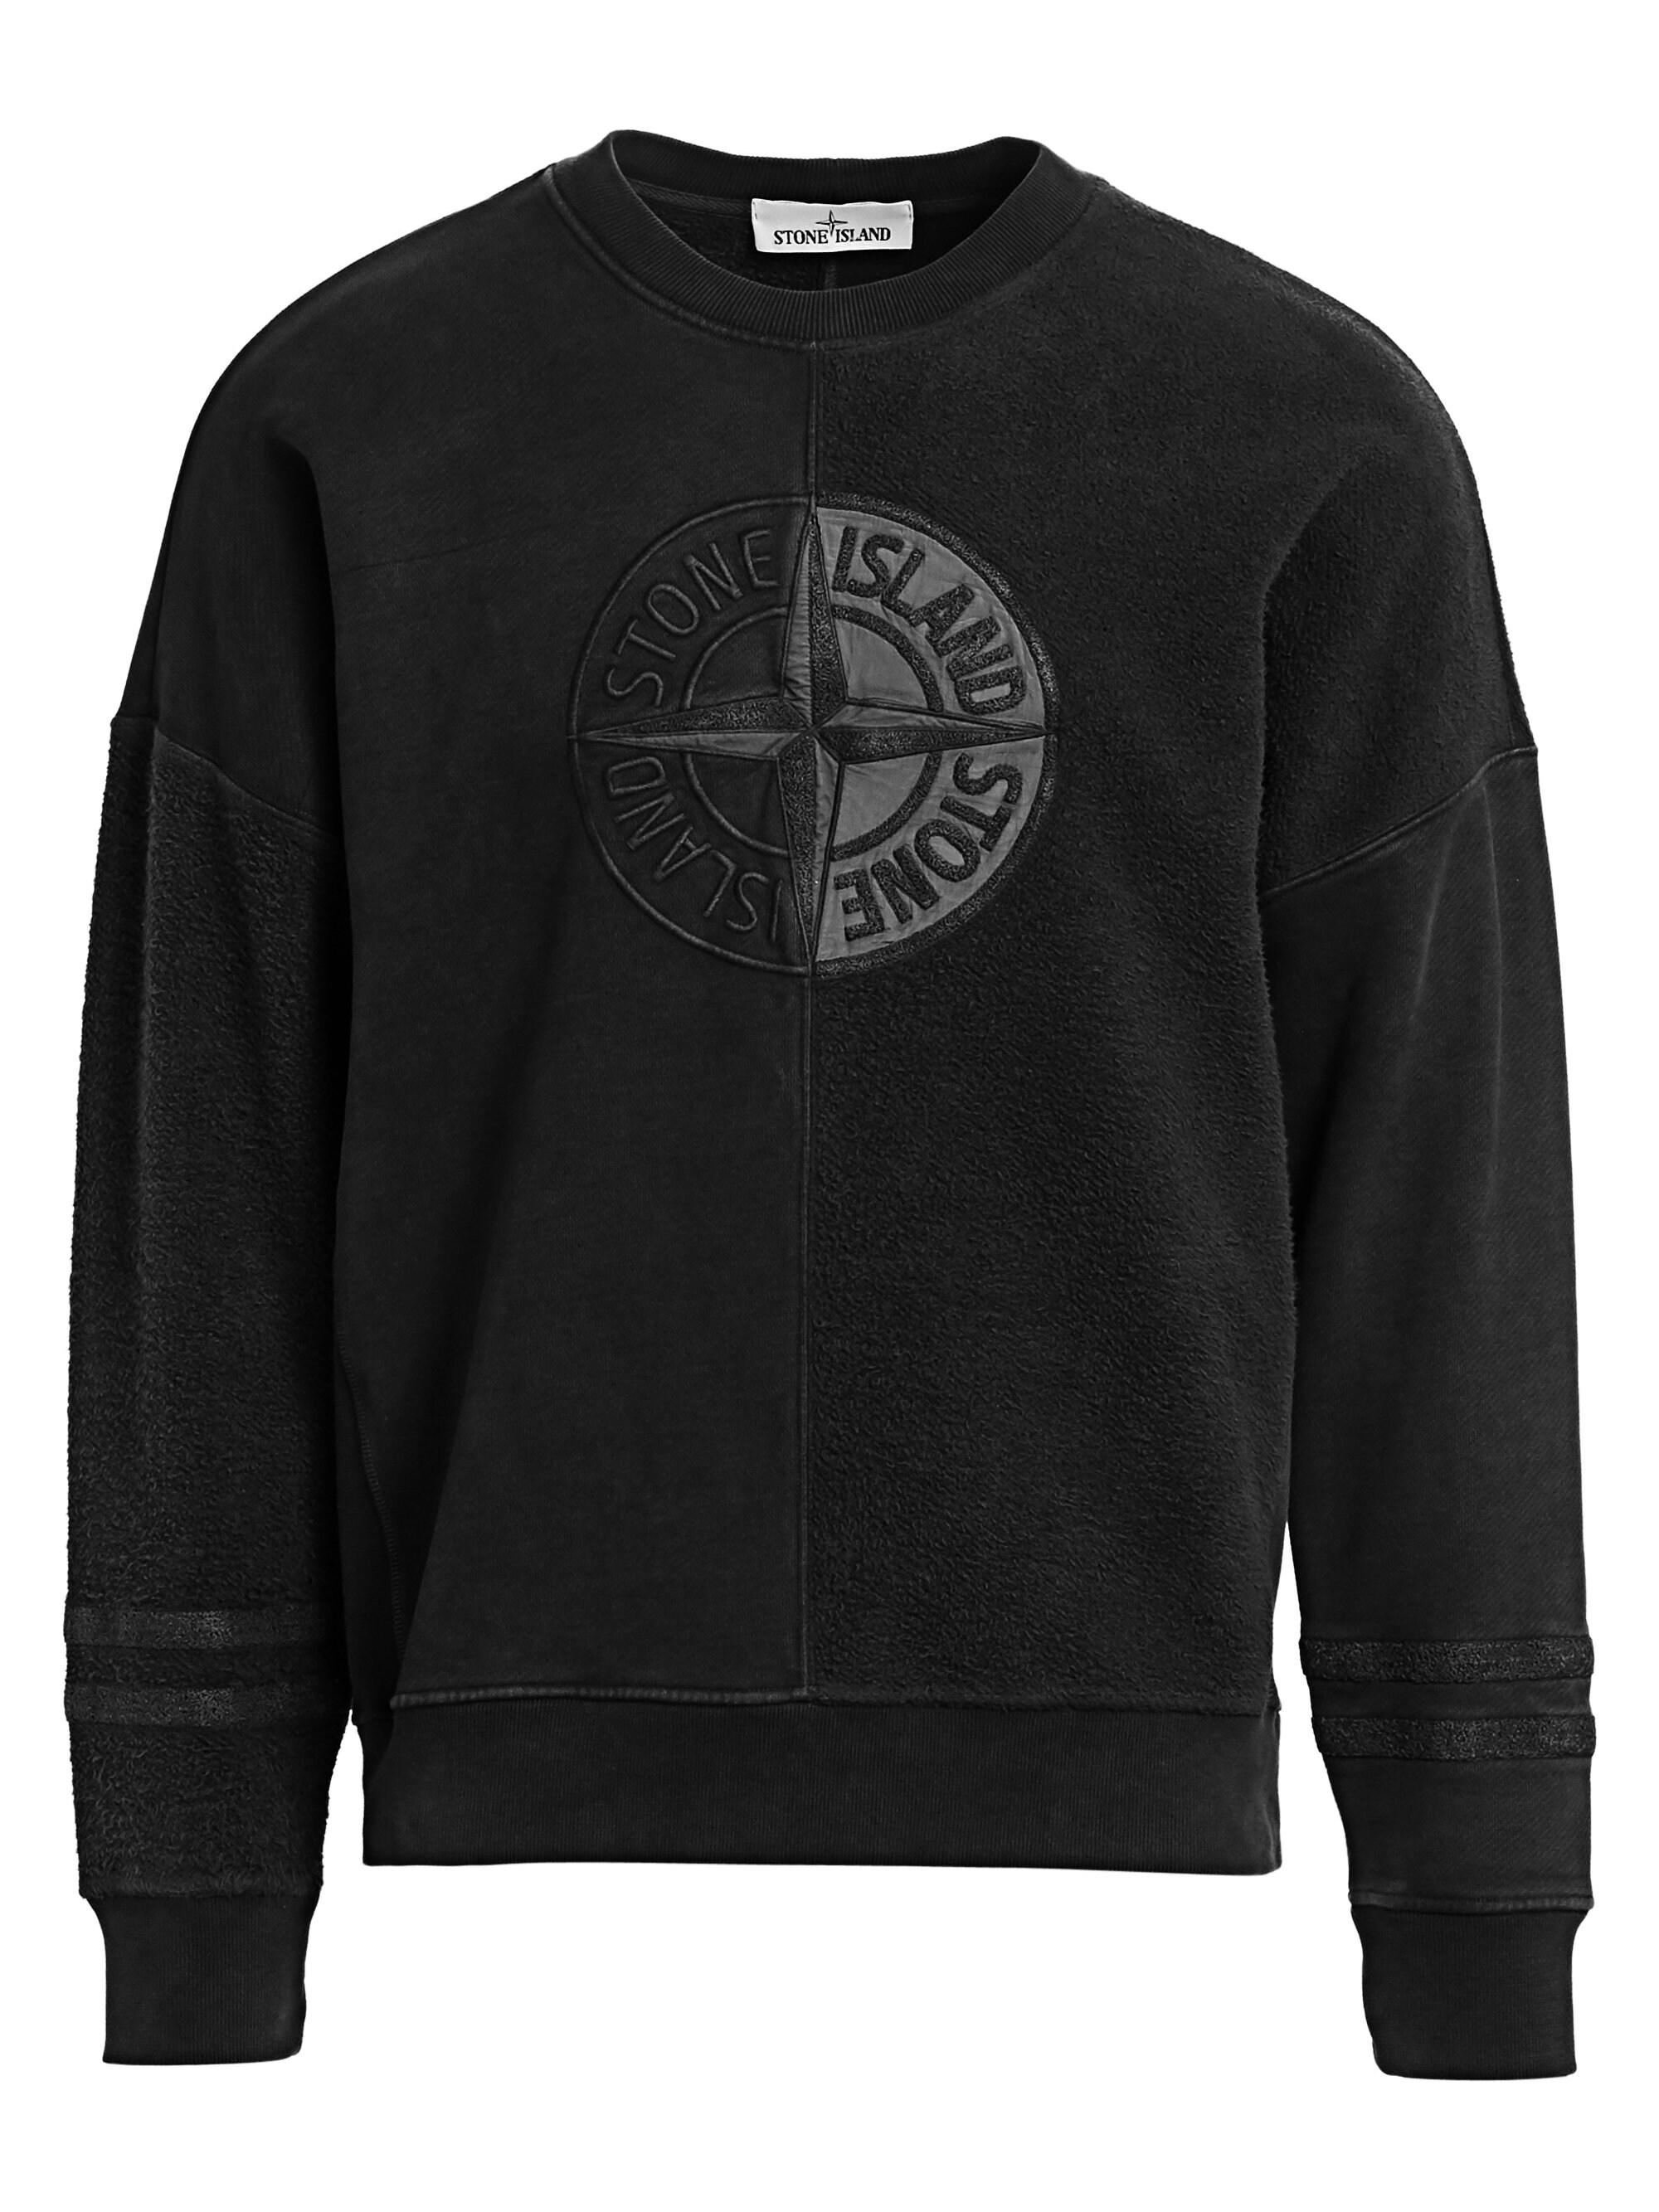 Stone Island Cotton Logo Sweatshirt in Black for Men - Save 22% - Lyst